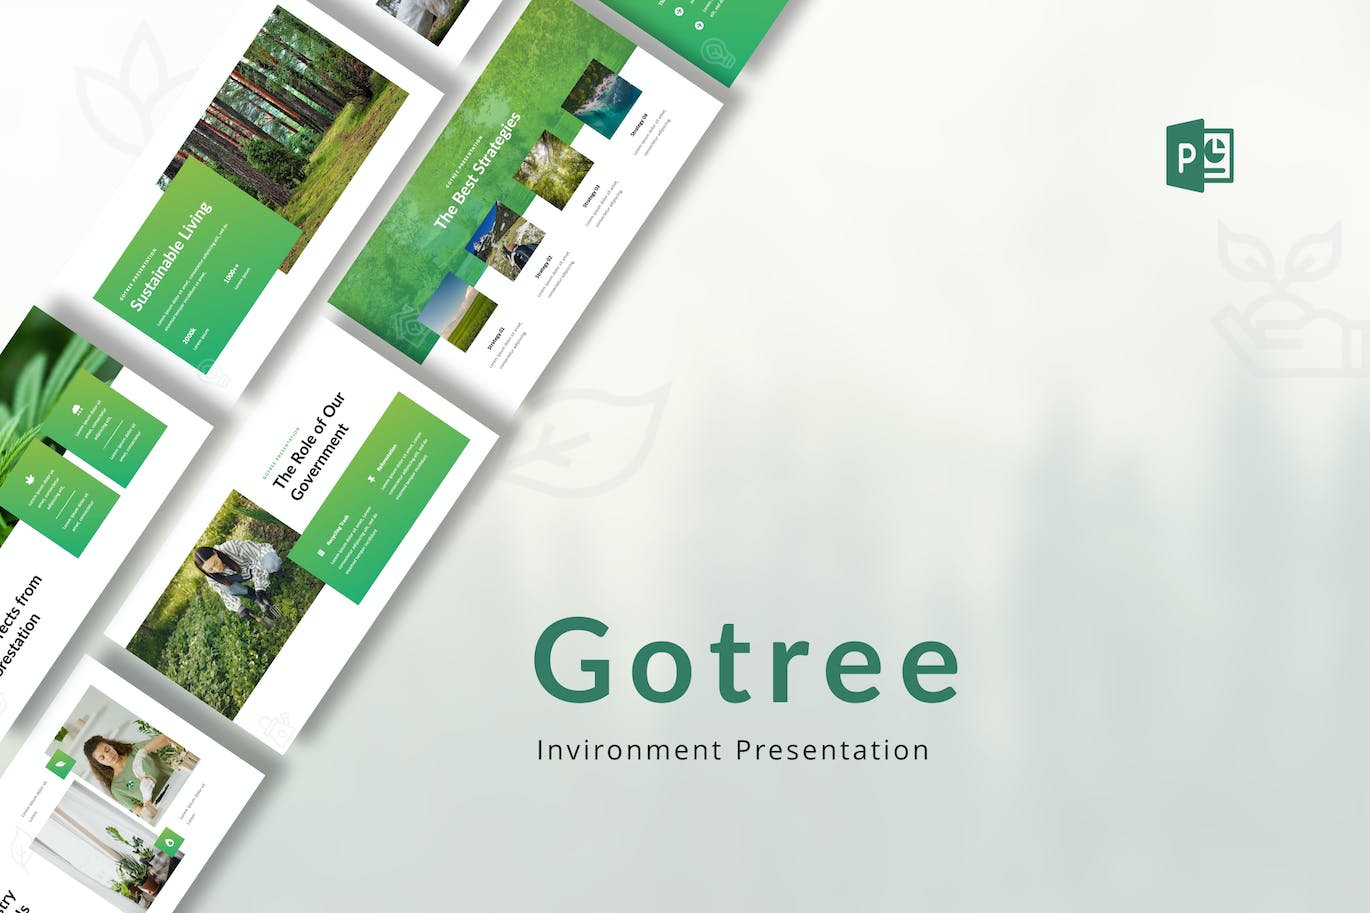 绿色生态环境PPT幻灯片模板素材 Gotree – Environment Presentation PowerPoint 幻灯图表 第1张